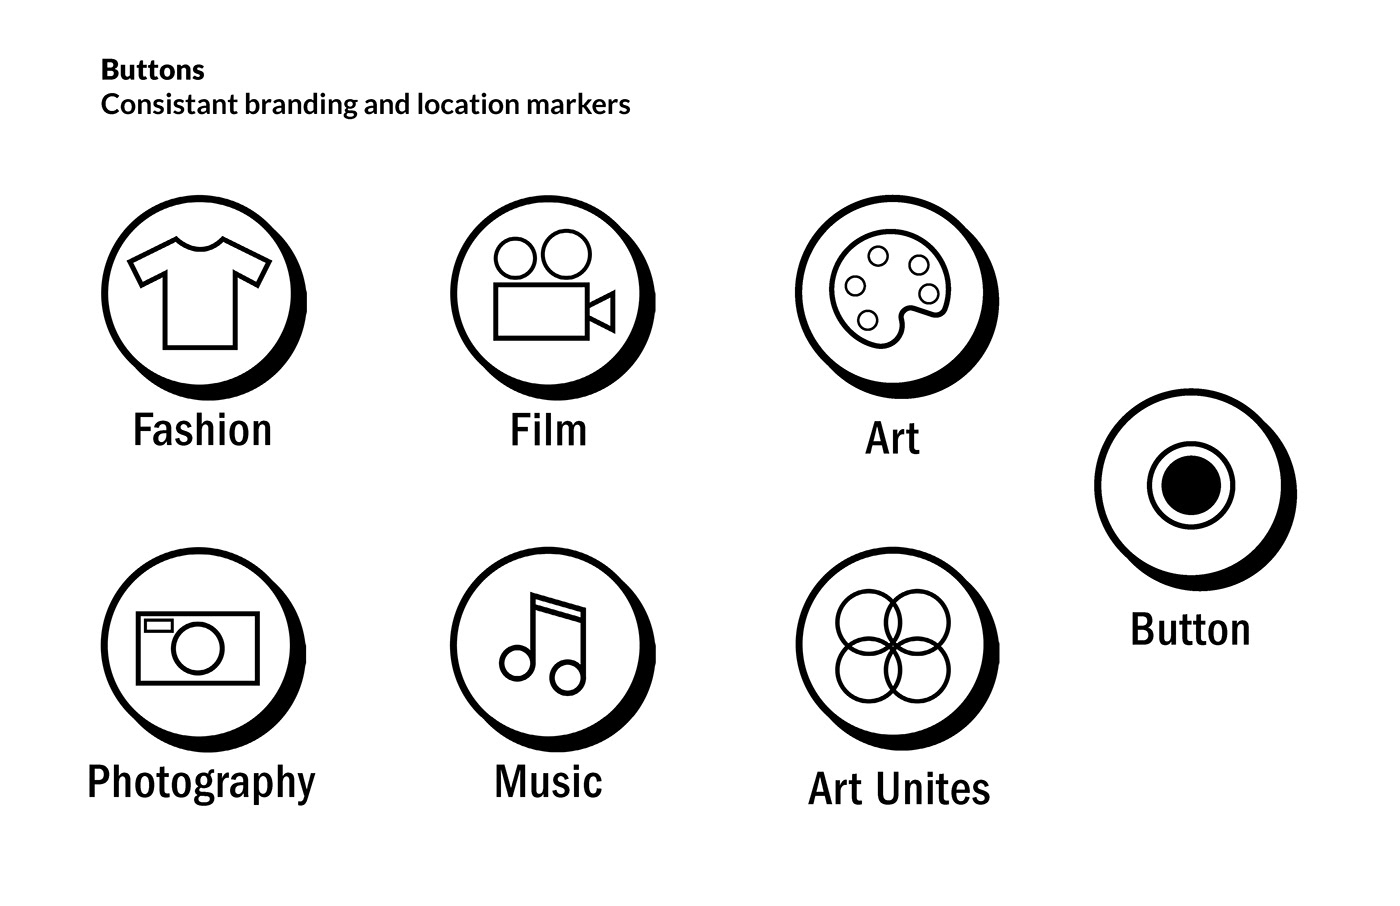 NYABF art book Rebrand design design system printed matter branding  app stamp